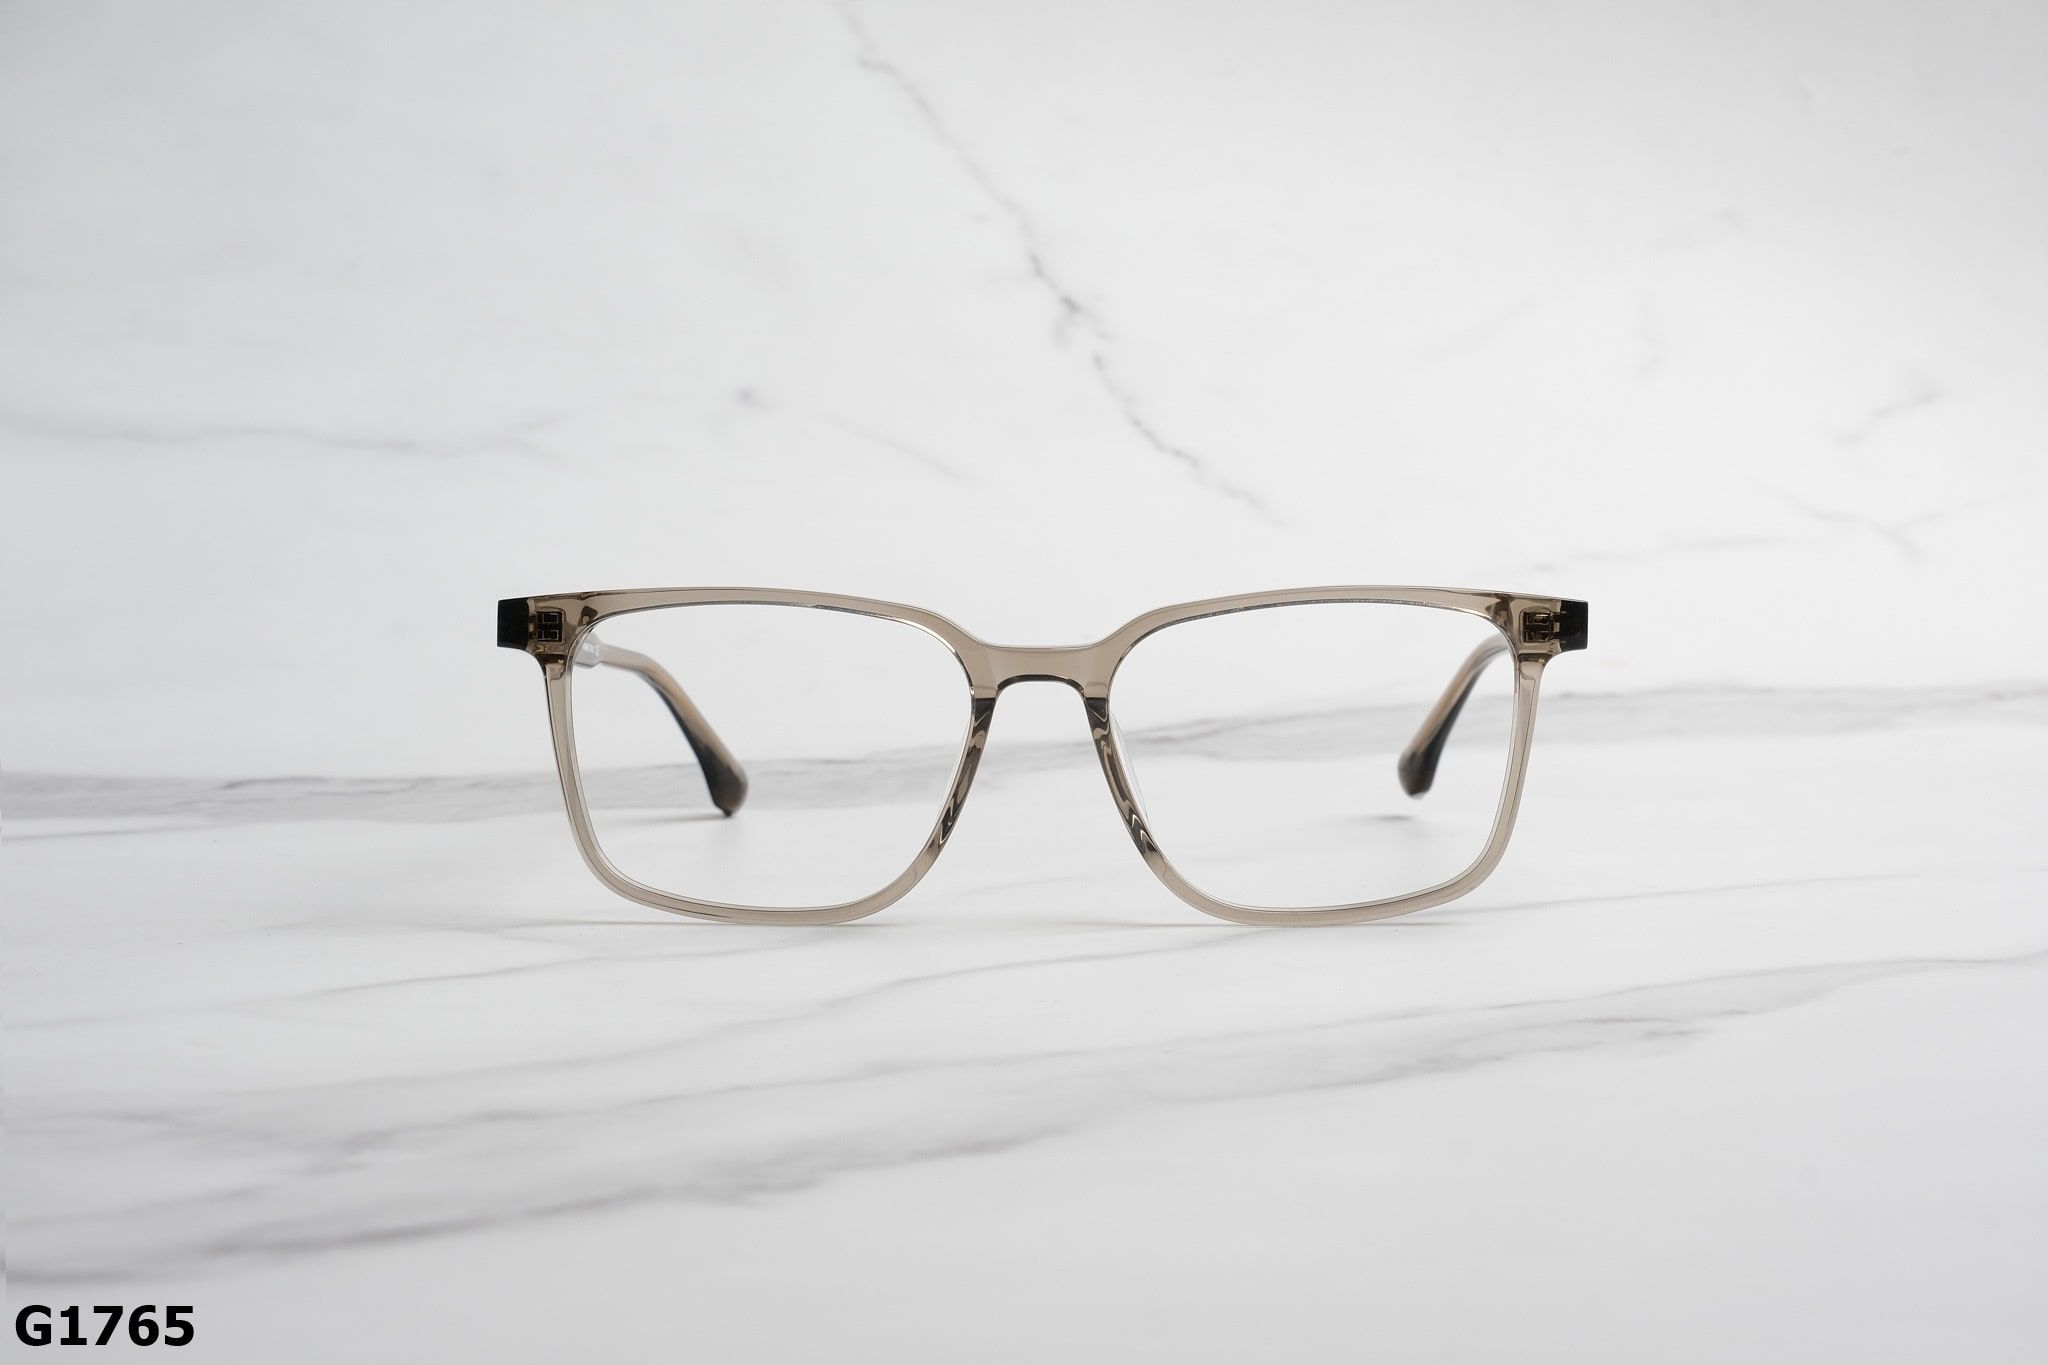  SHADY Eyewear - Glasses - G1765 